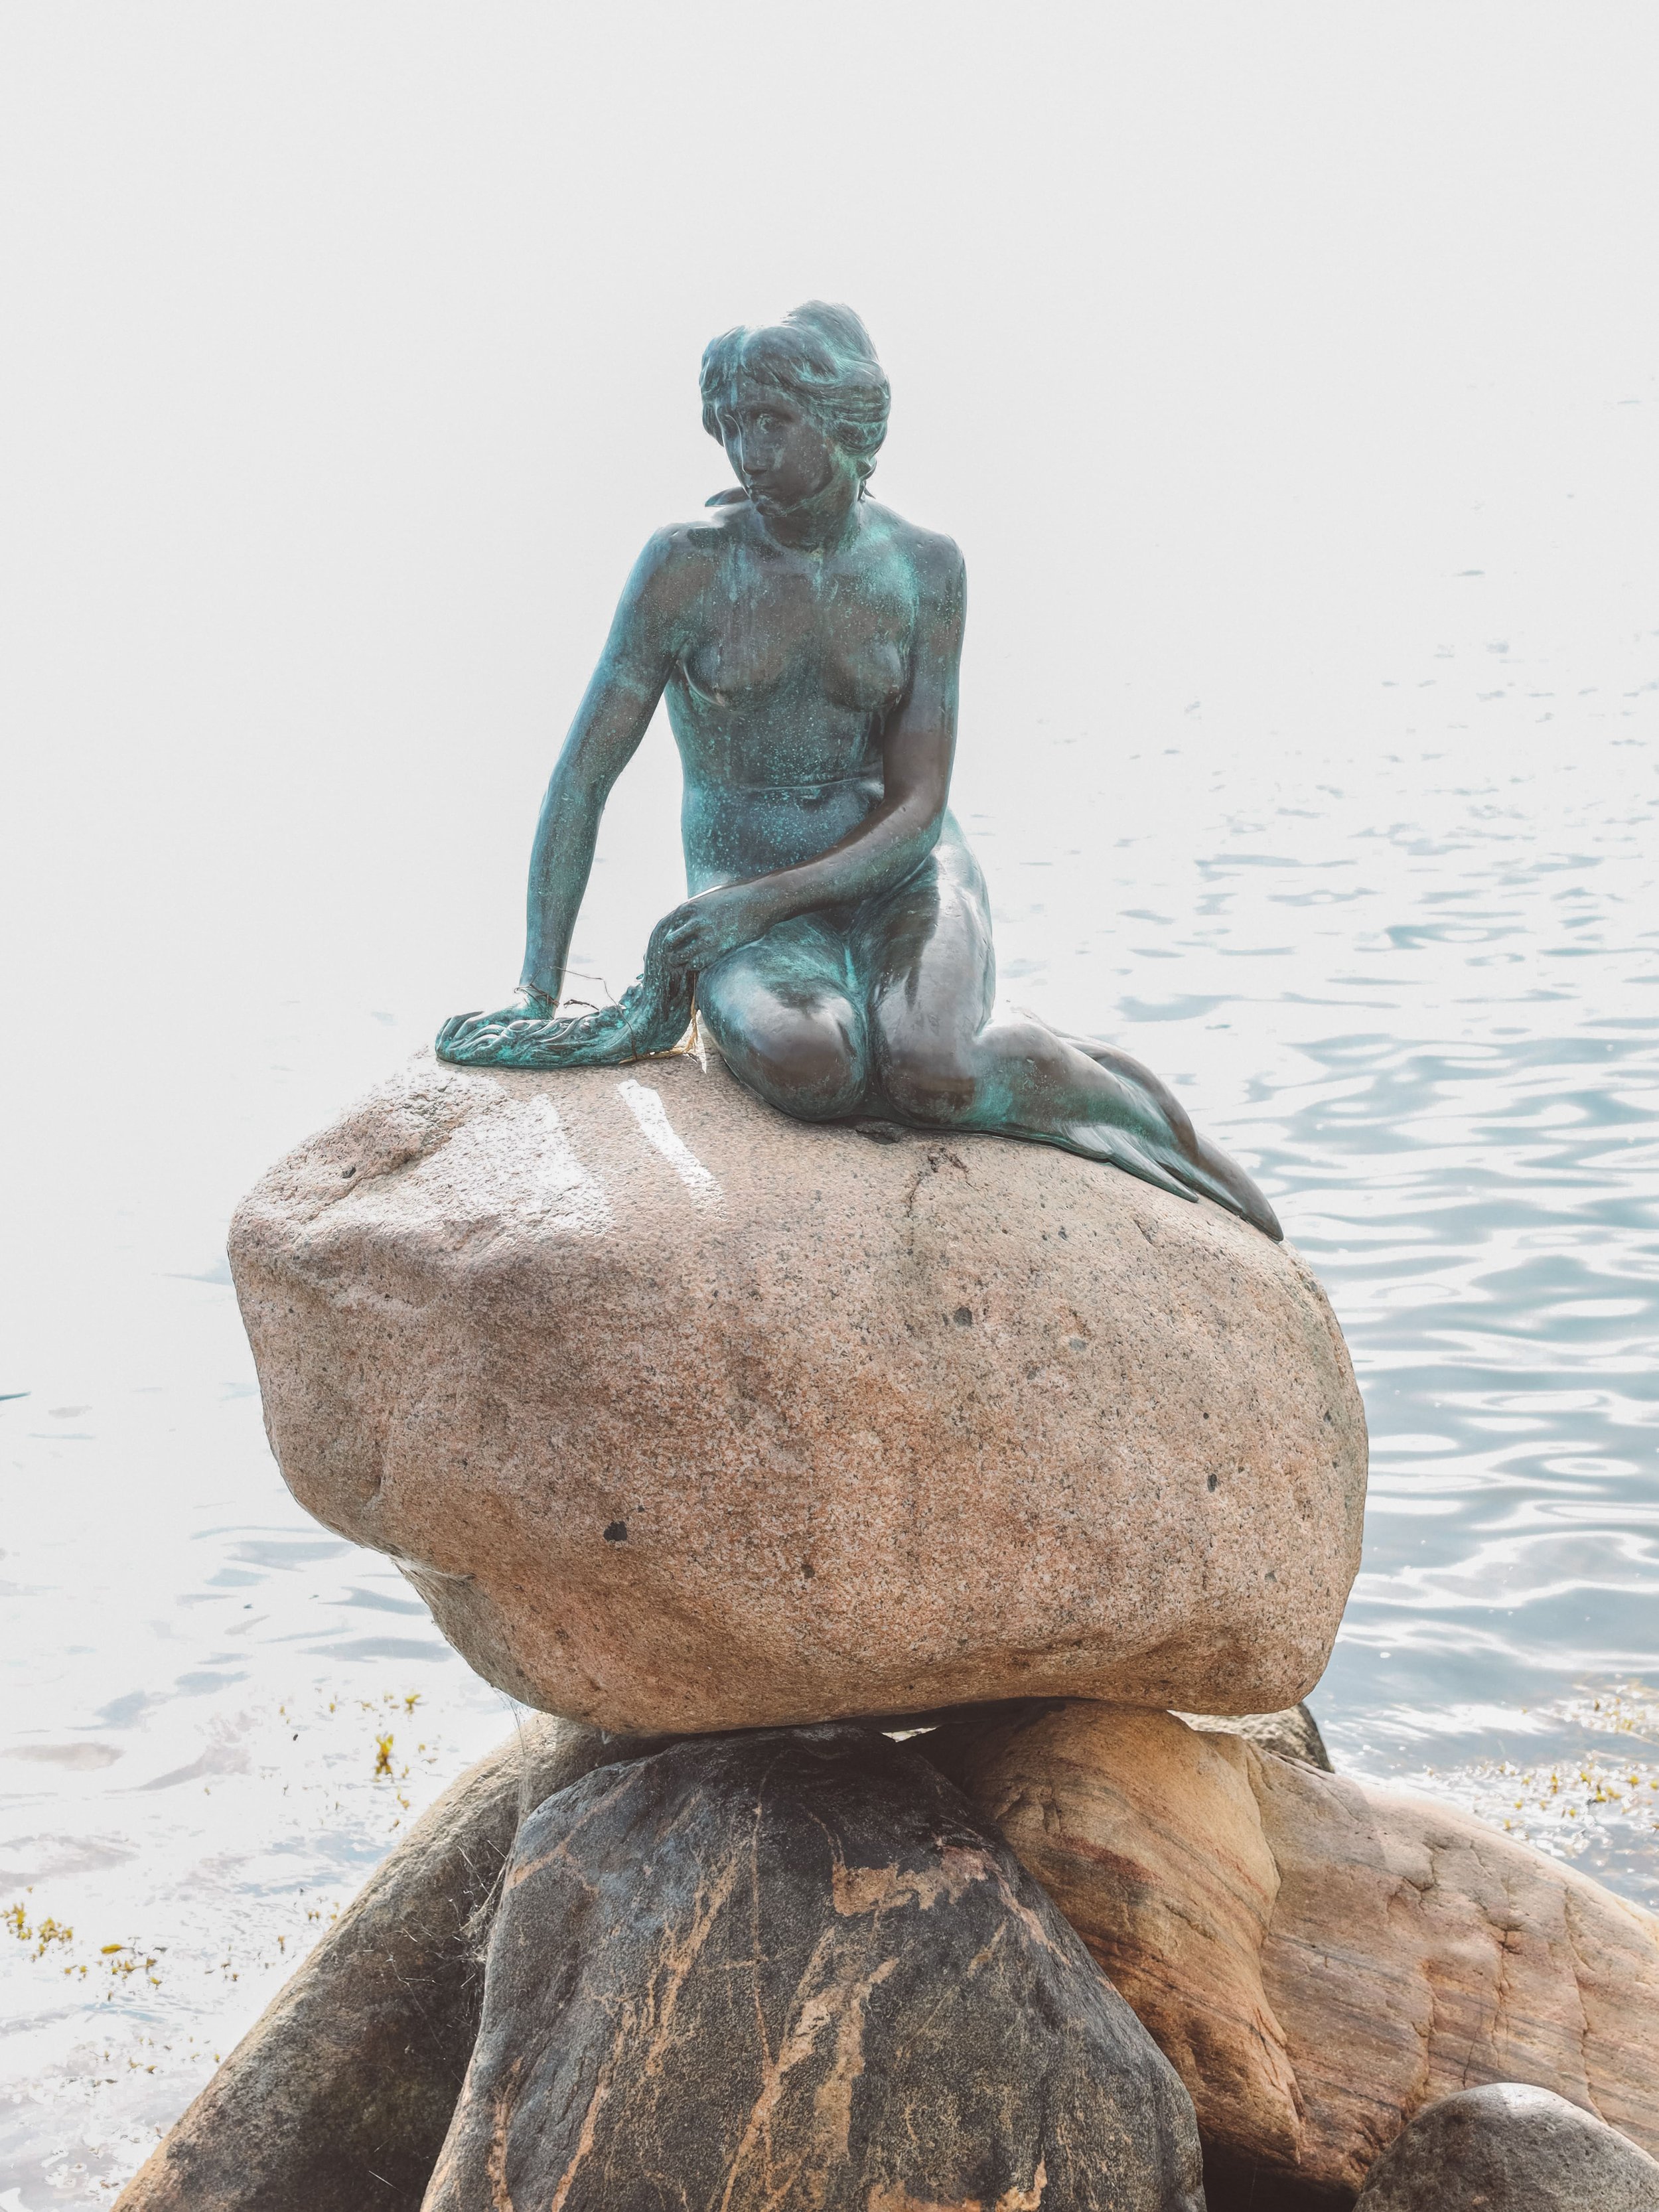 Close up - The Little Mermaid - Copenhagen - Denmark